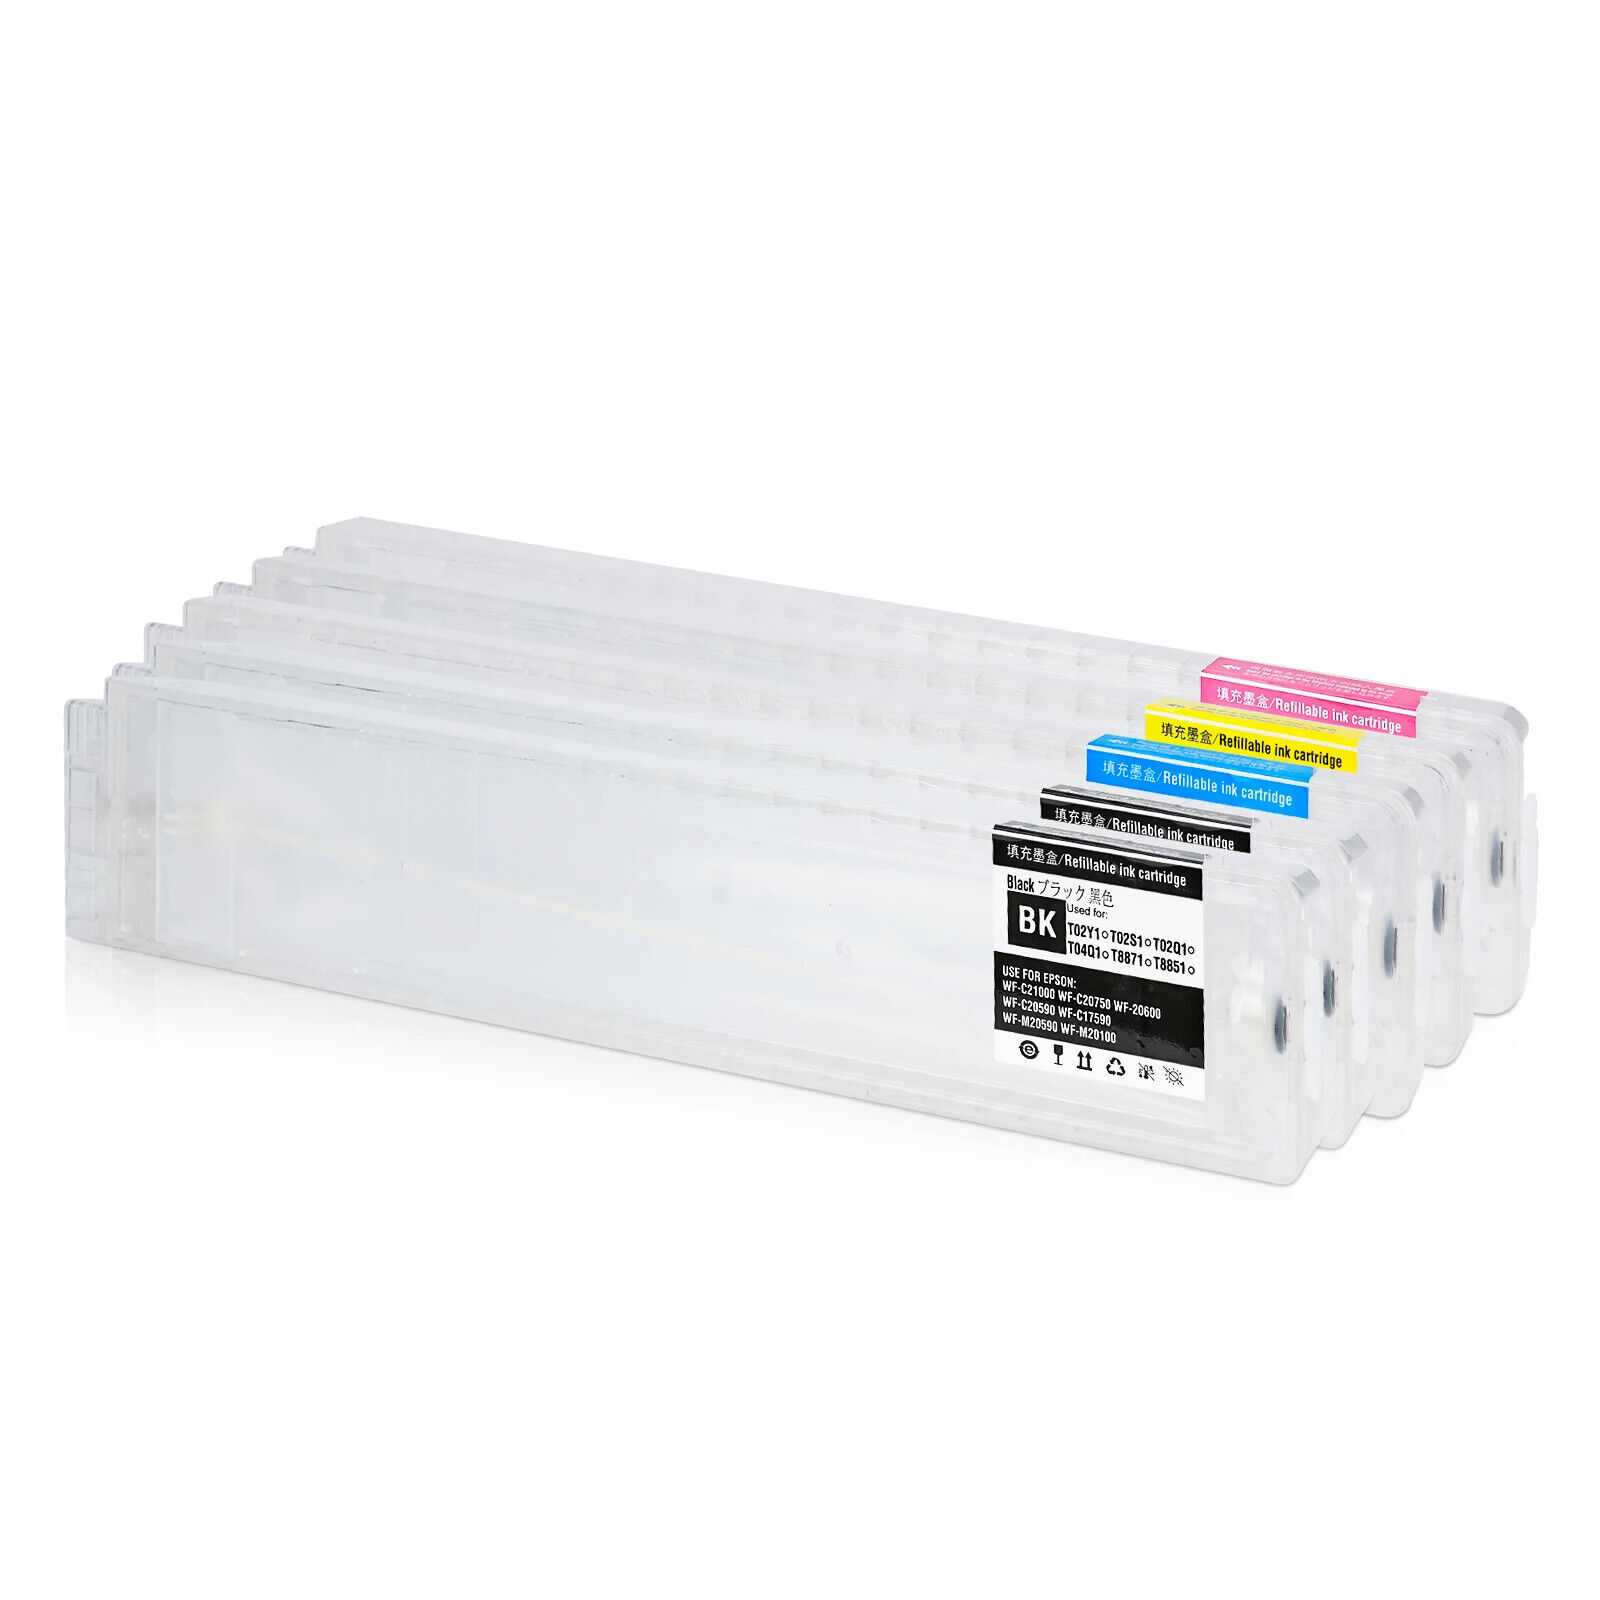 Refillable Cartridge For Epson Workforce WF-C20590 C17590 C20750 C21000 C20600